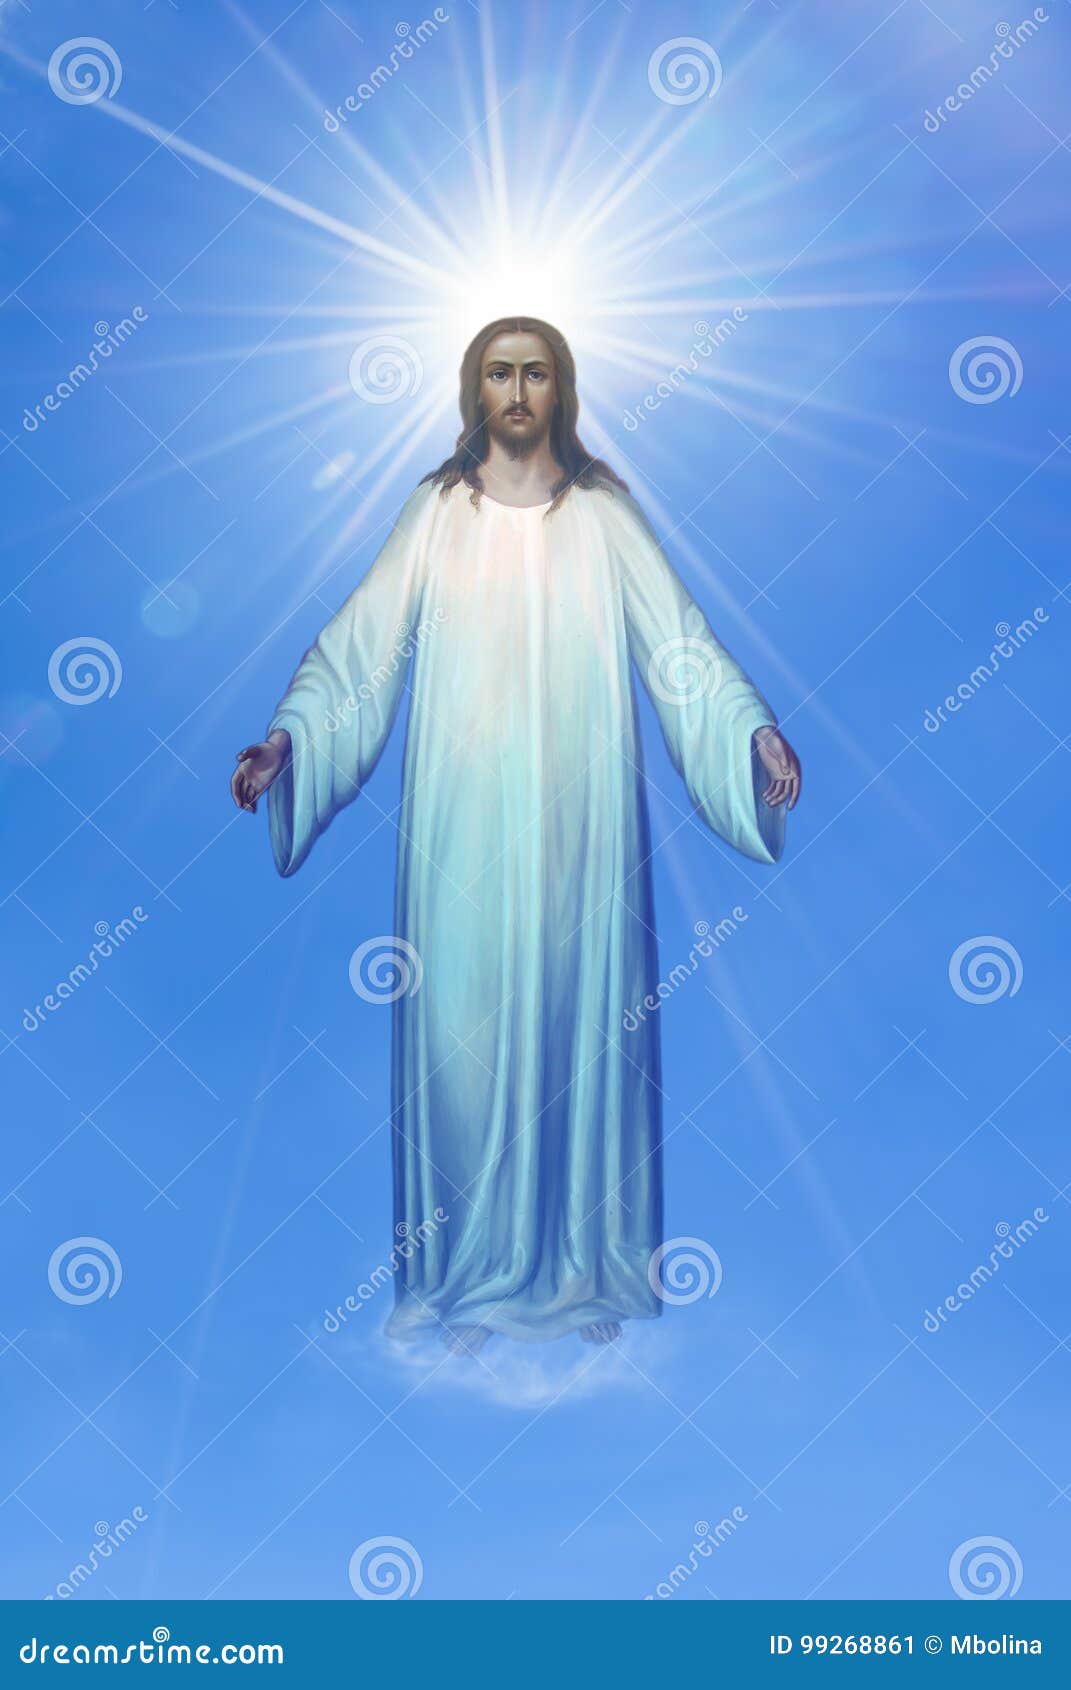 Jesus Christ in Heaven Religion Concept Stock Image - Image of ...